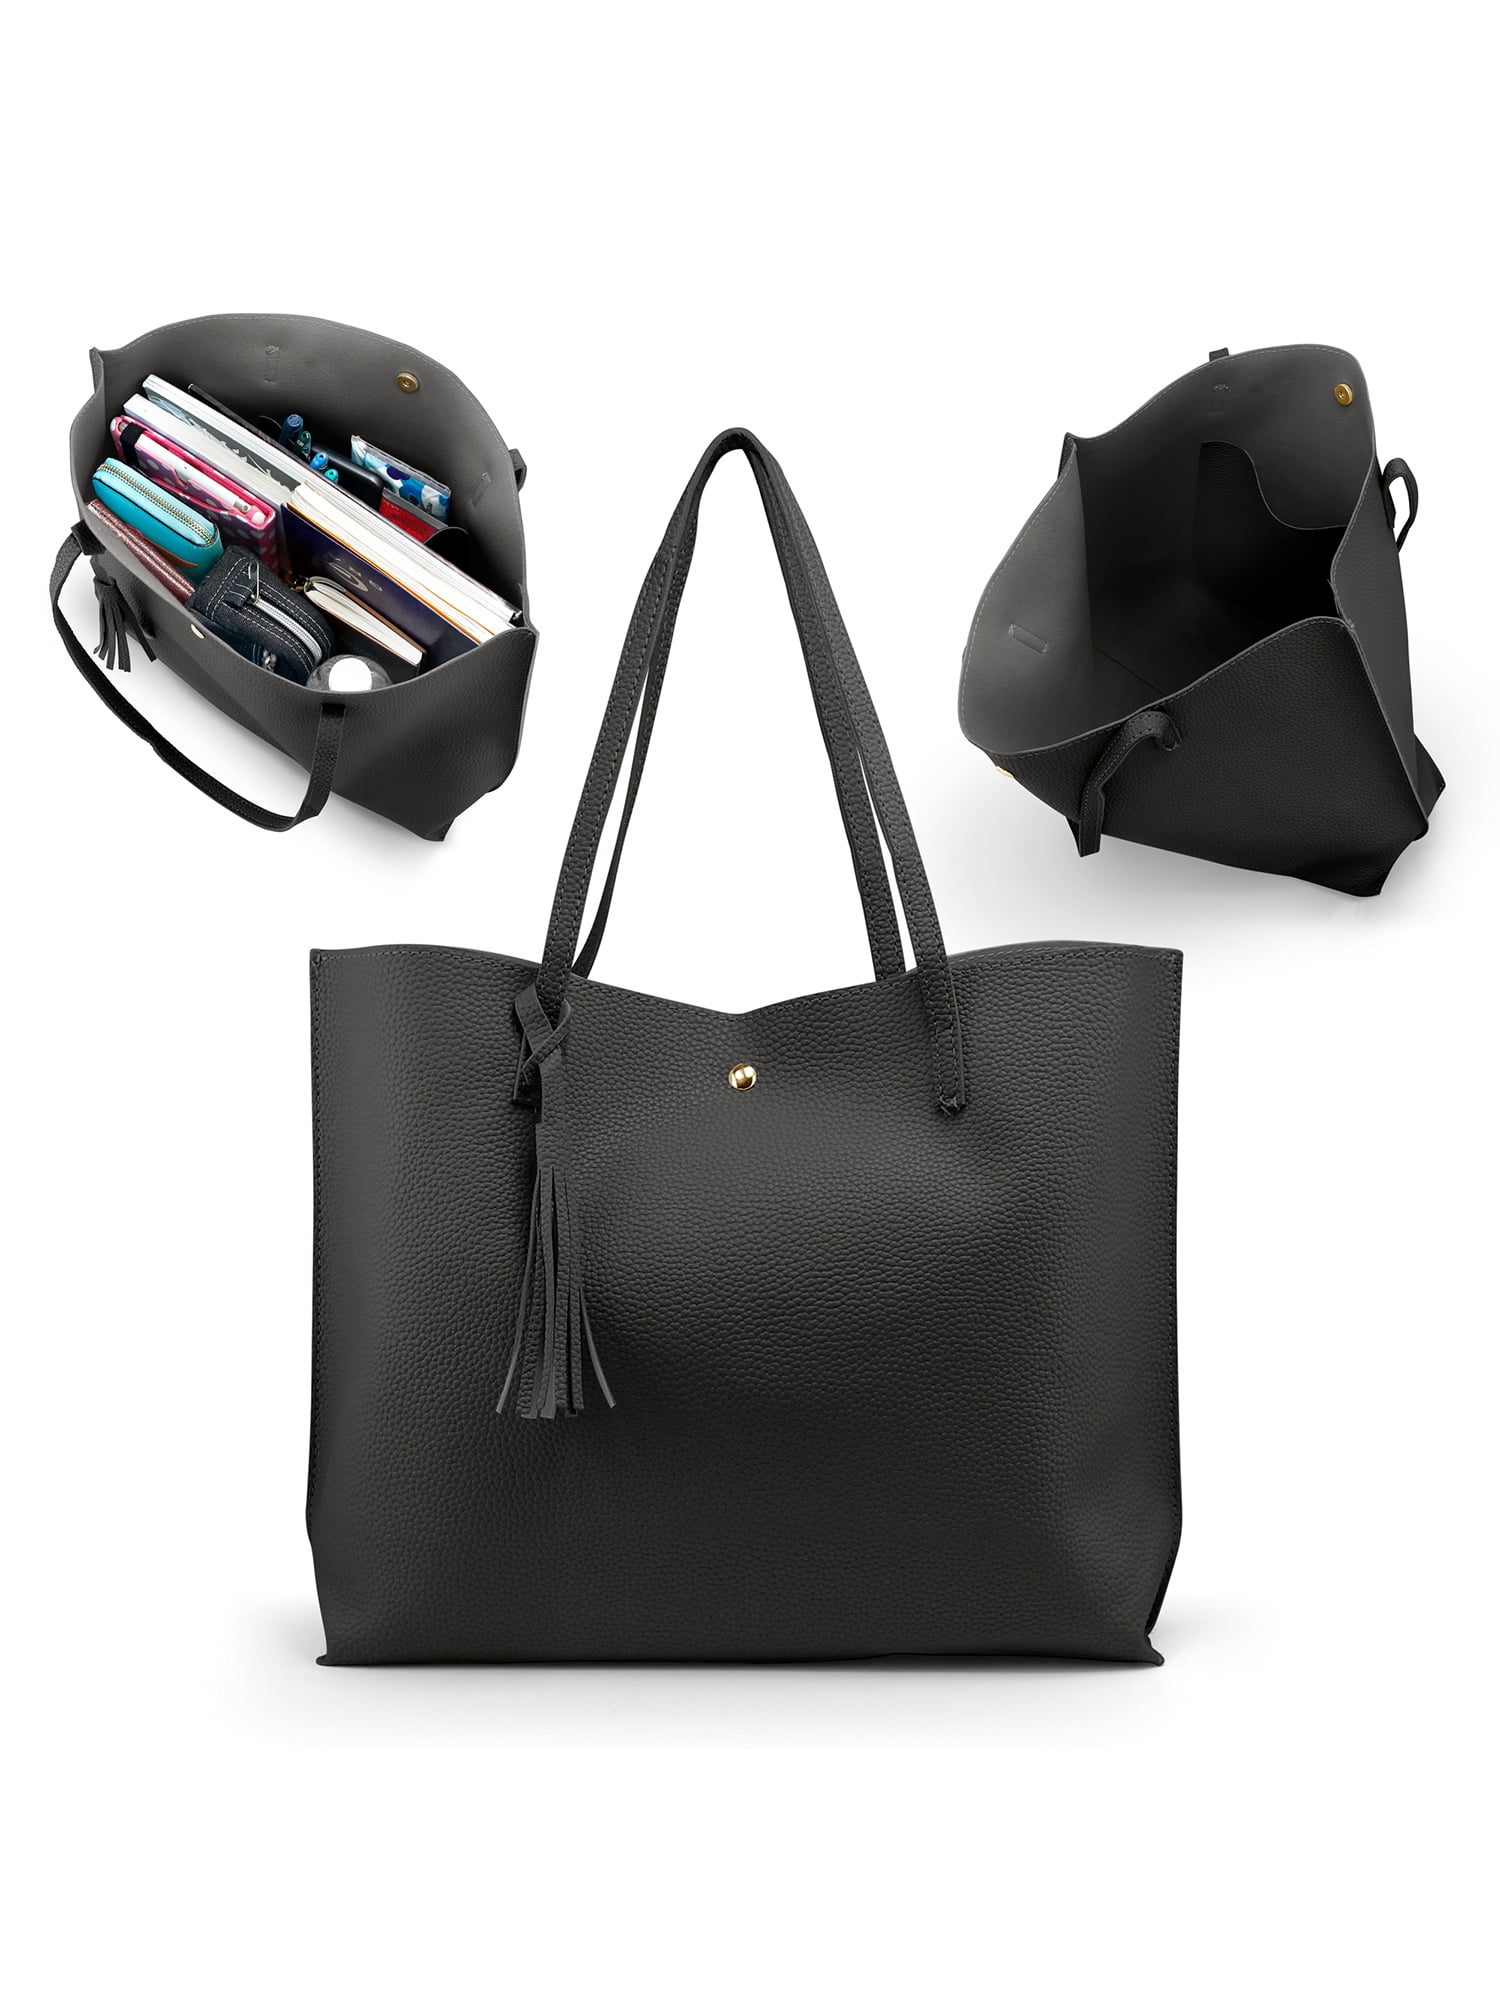 Women PU Leather Tote Shoulder Bags Handbags Satchel Messenger bag Purse 